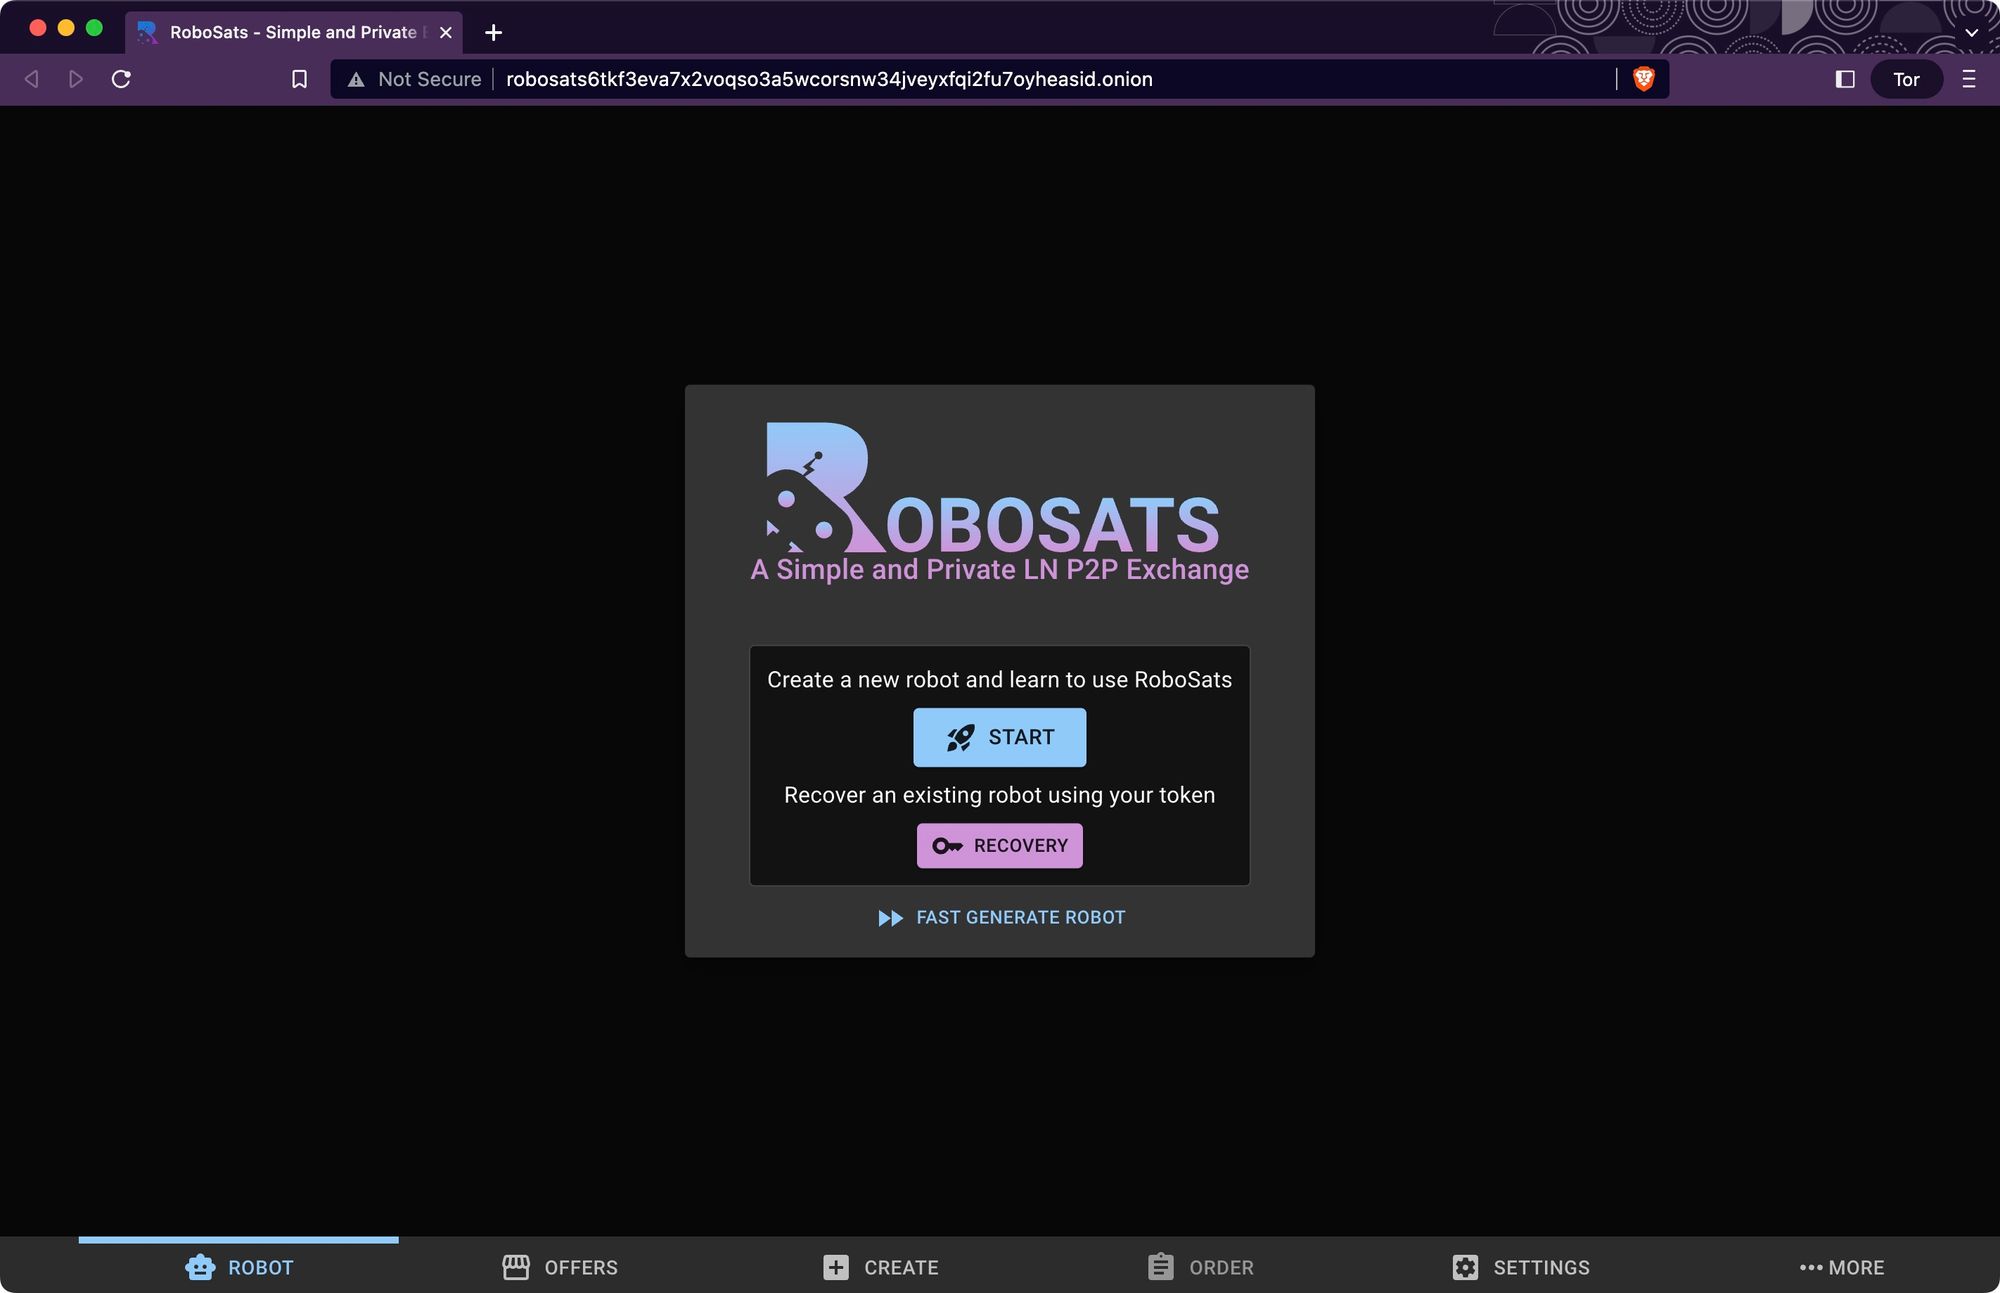 The RoboSats Homepage